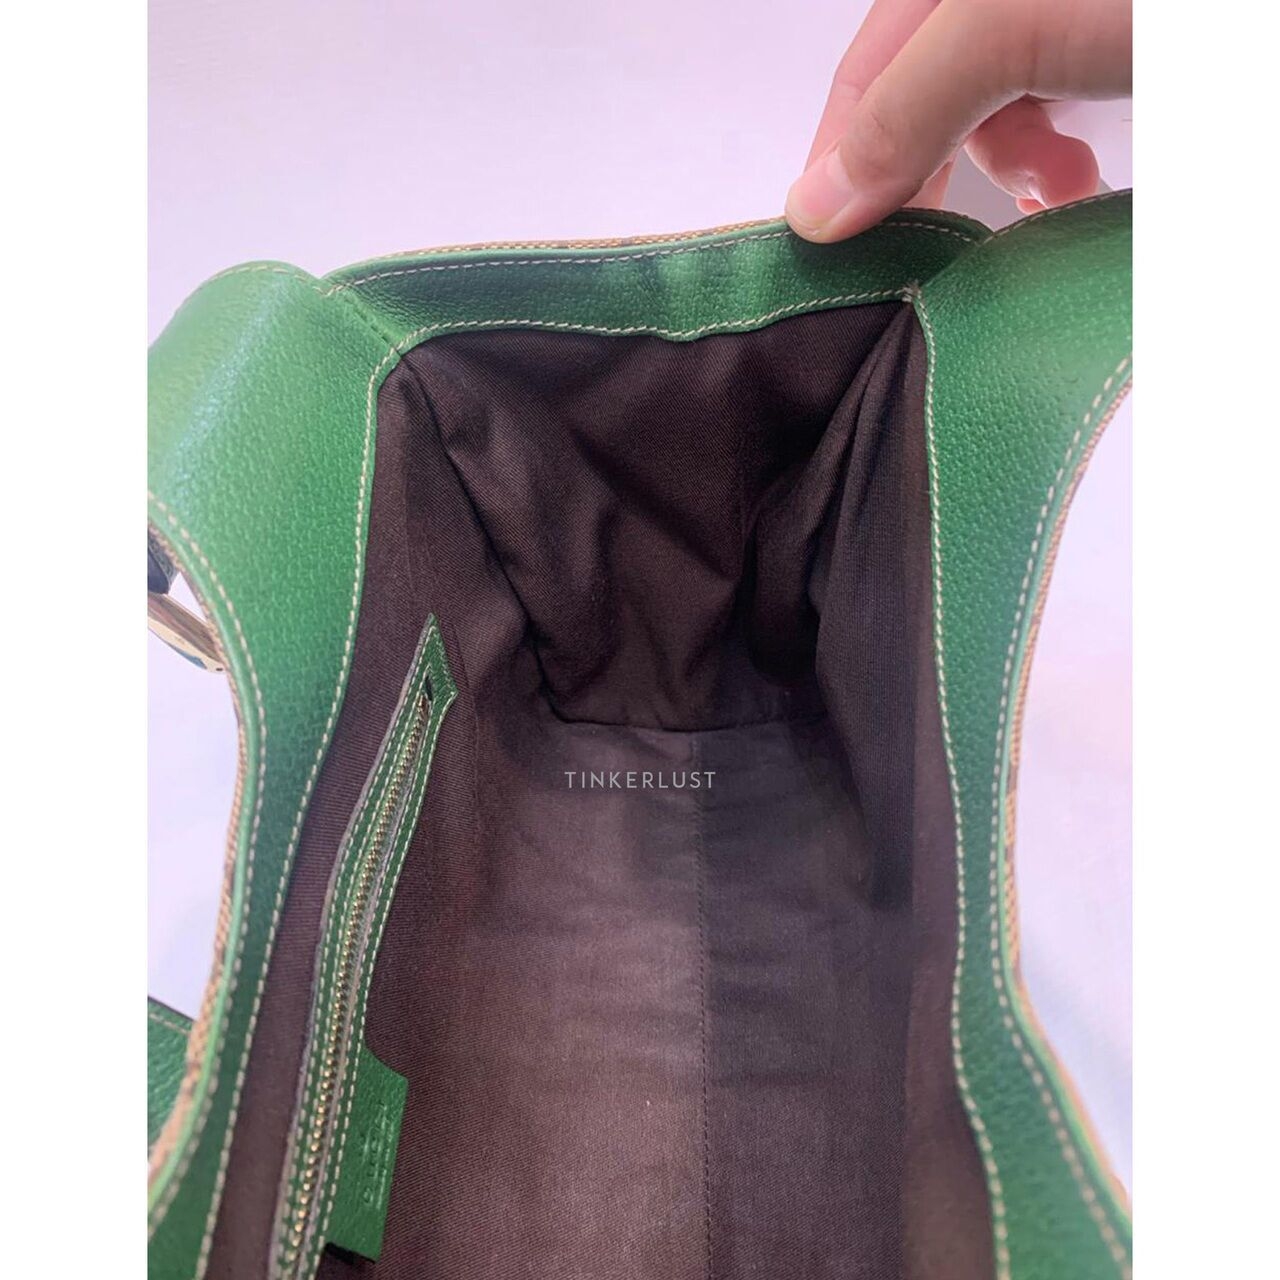 Gucci Bardot Vintage Canvas Green Leather Handbag 